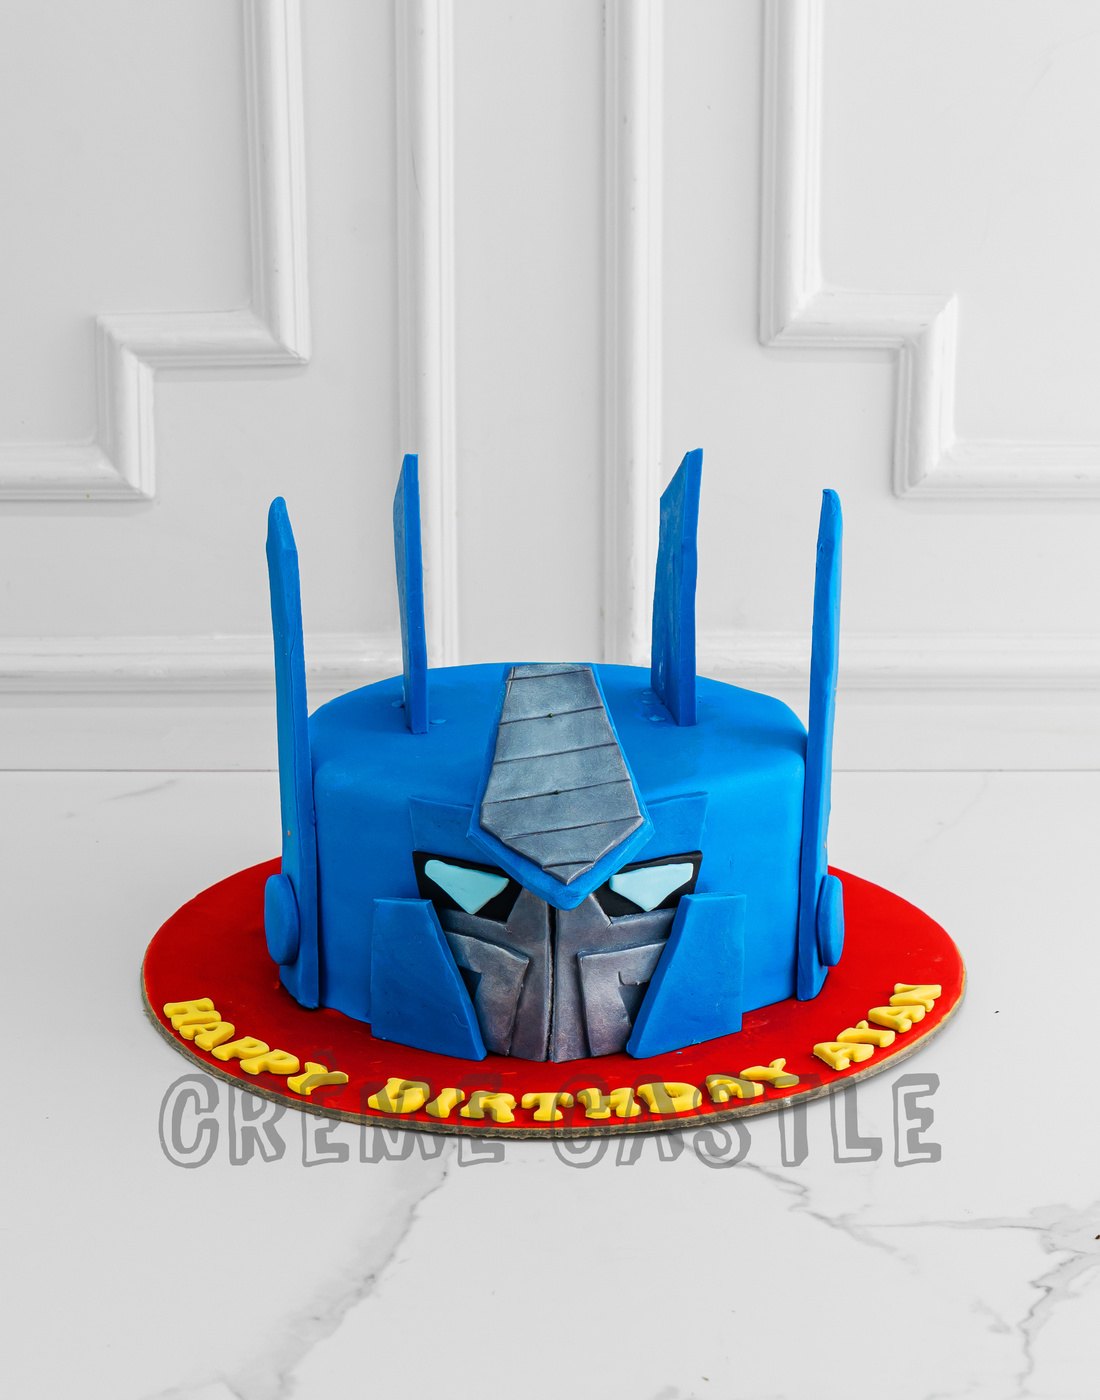 Transformers Cake by 99girls on DeviantArt